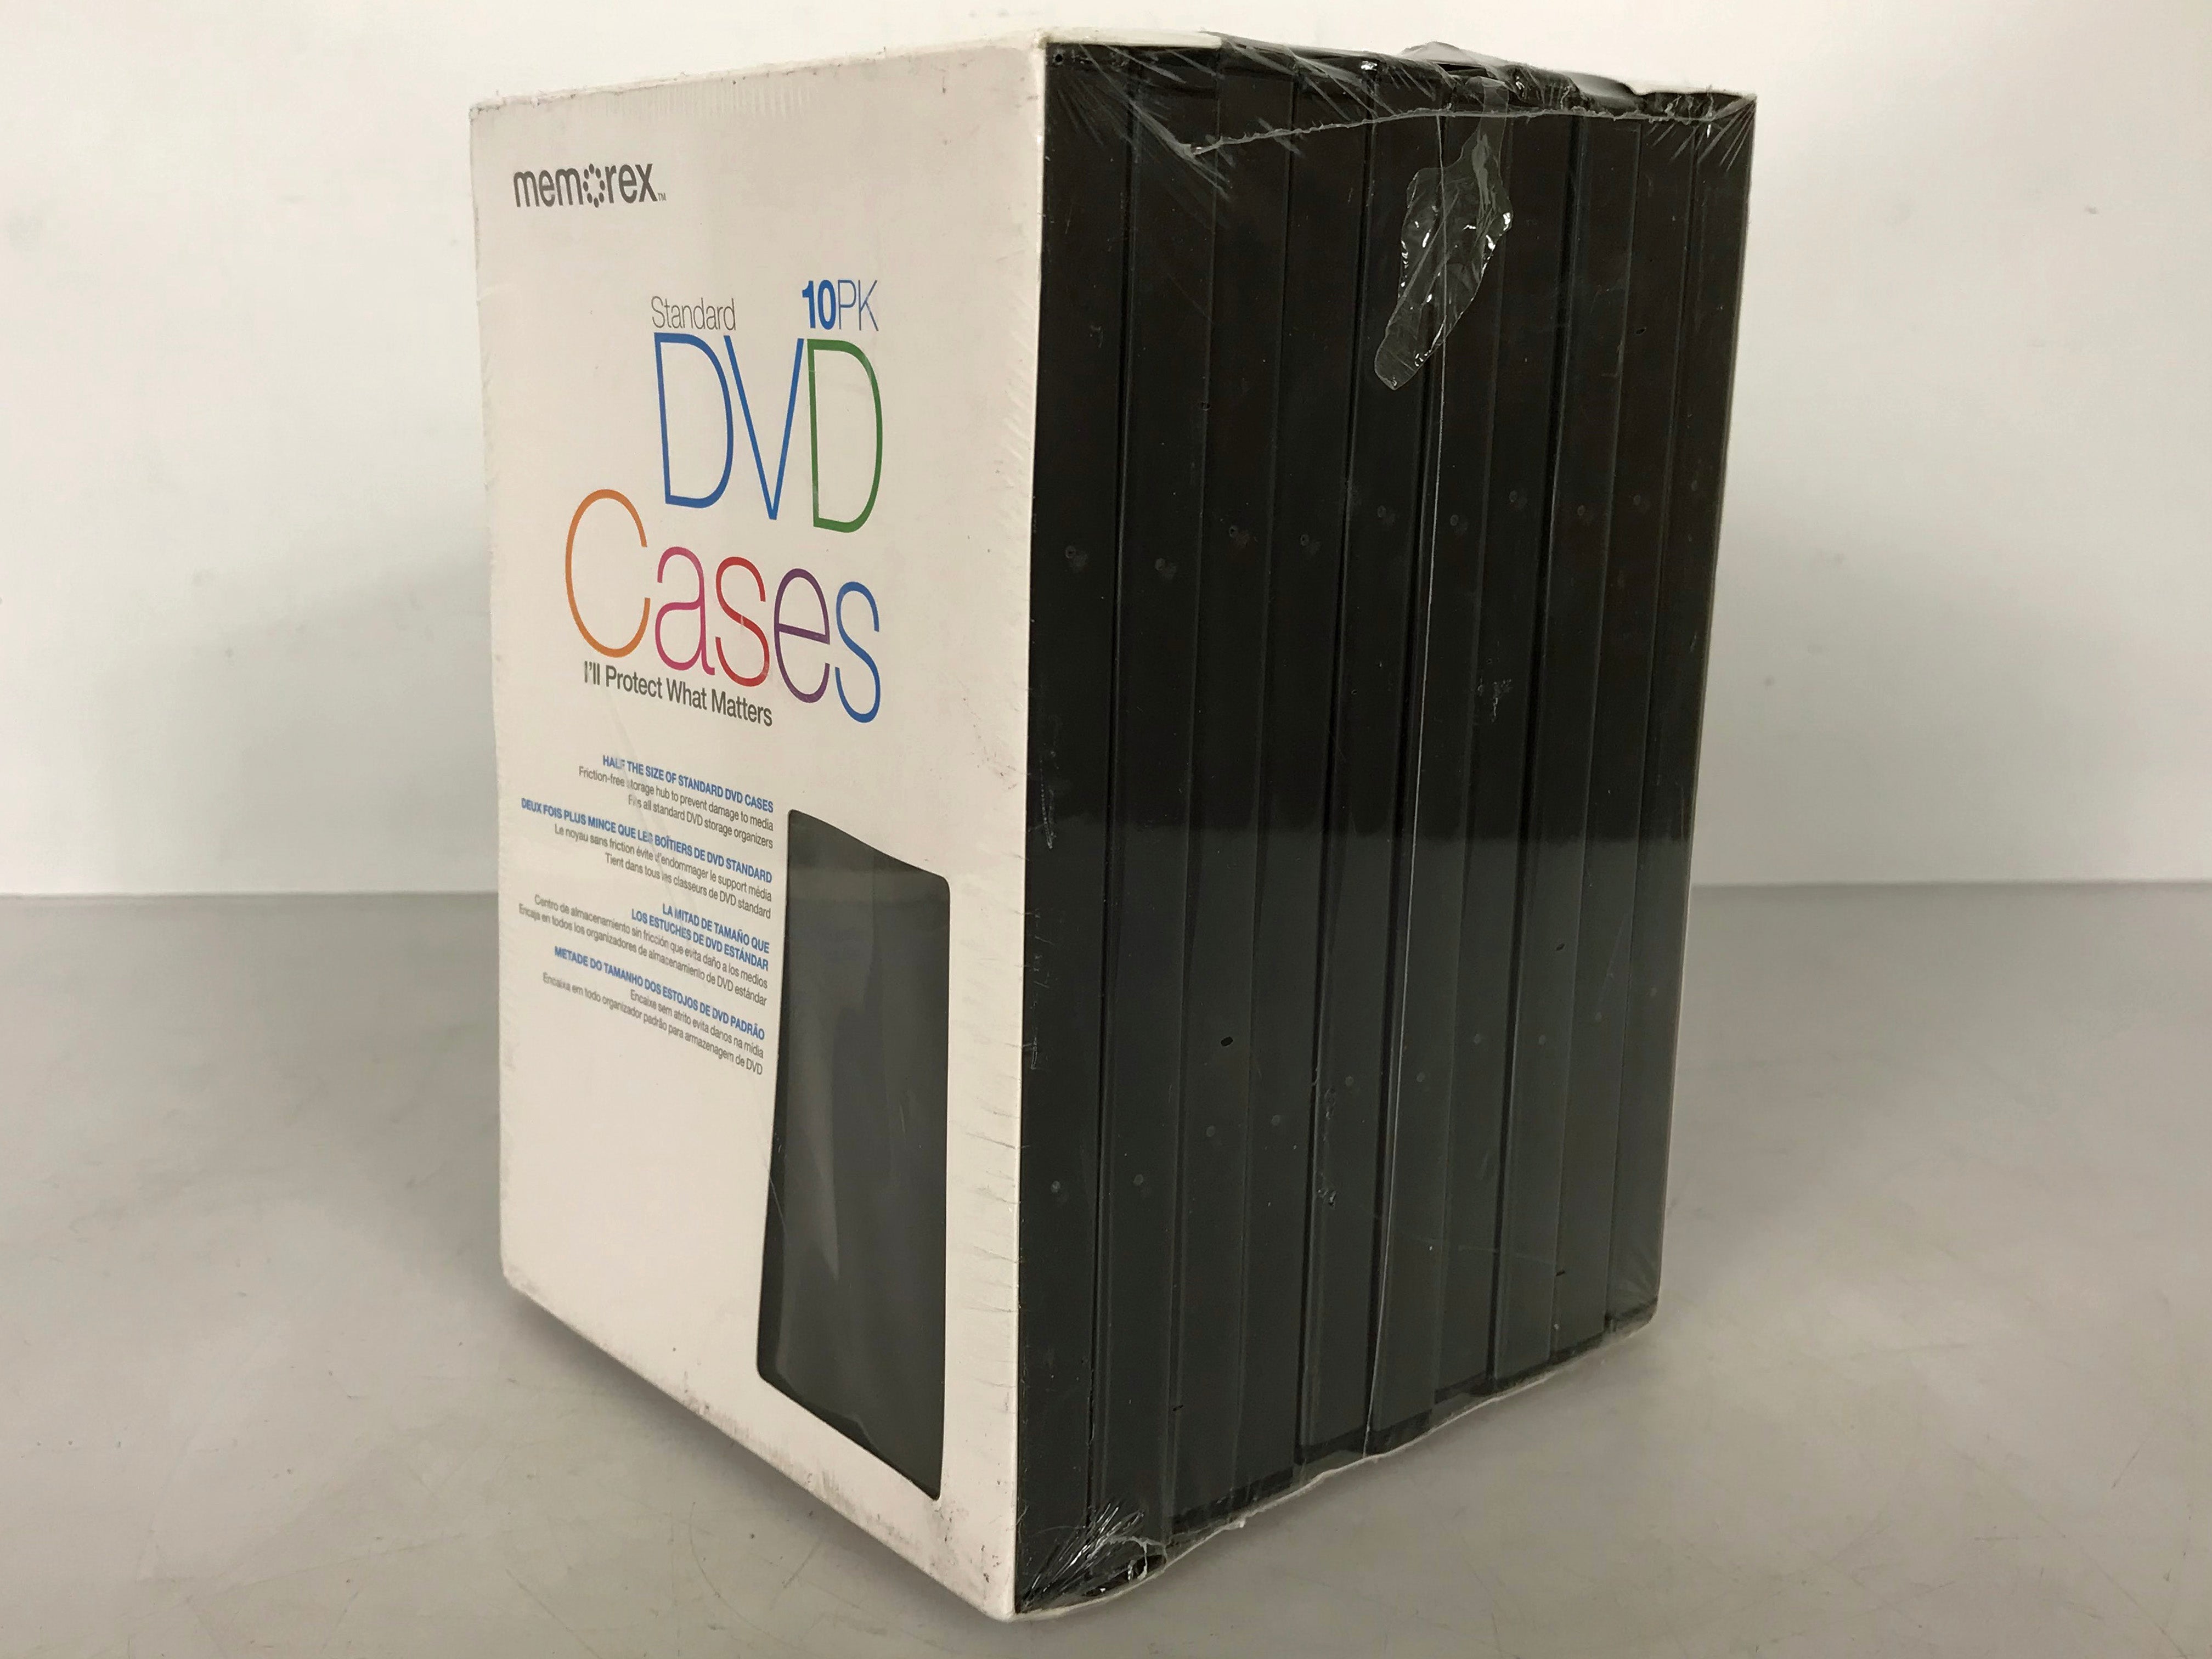 10-Pack Memorex Standard DVD Cases